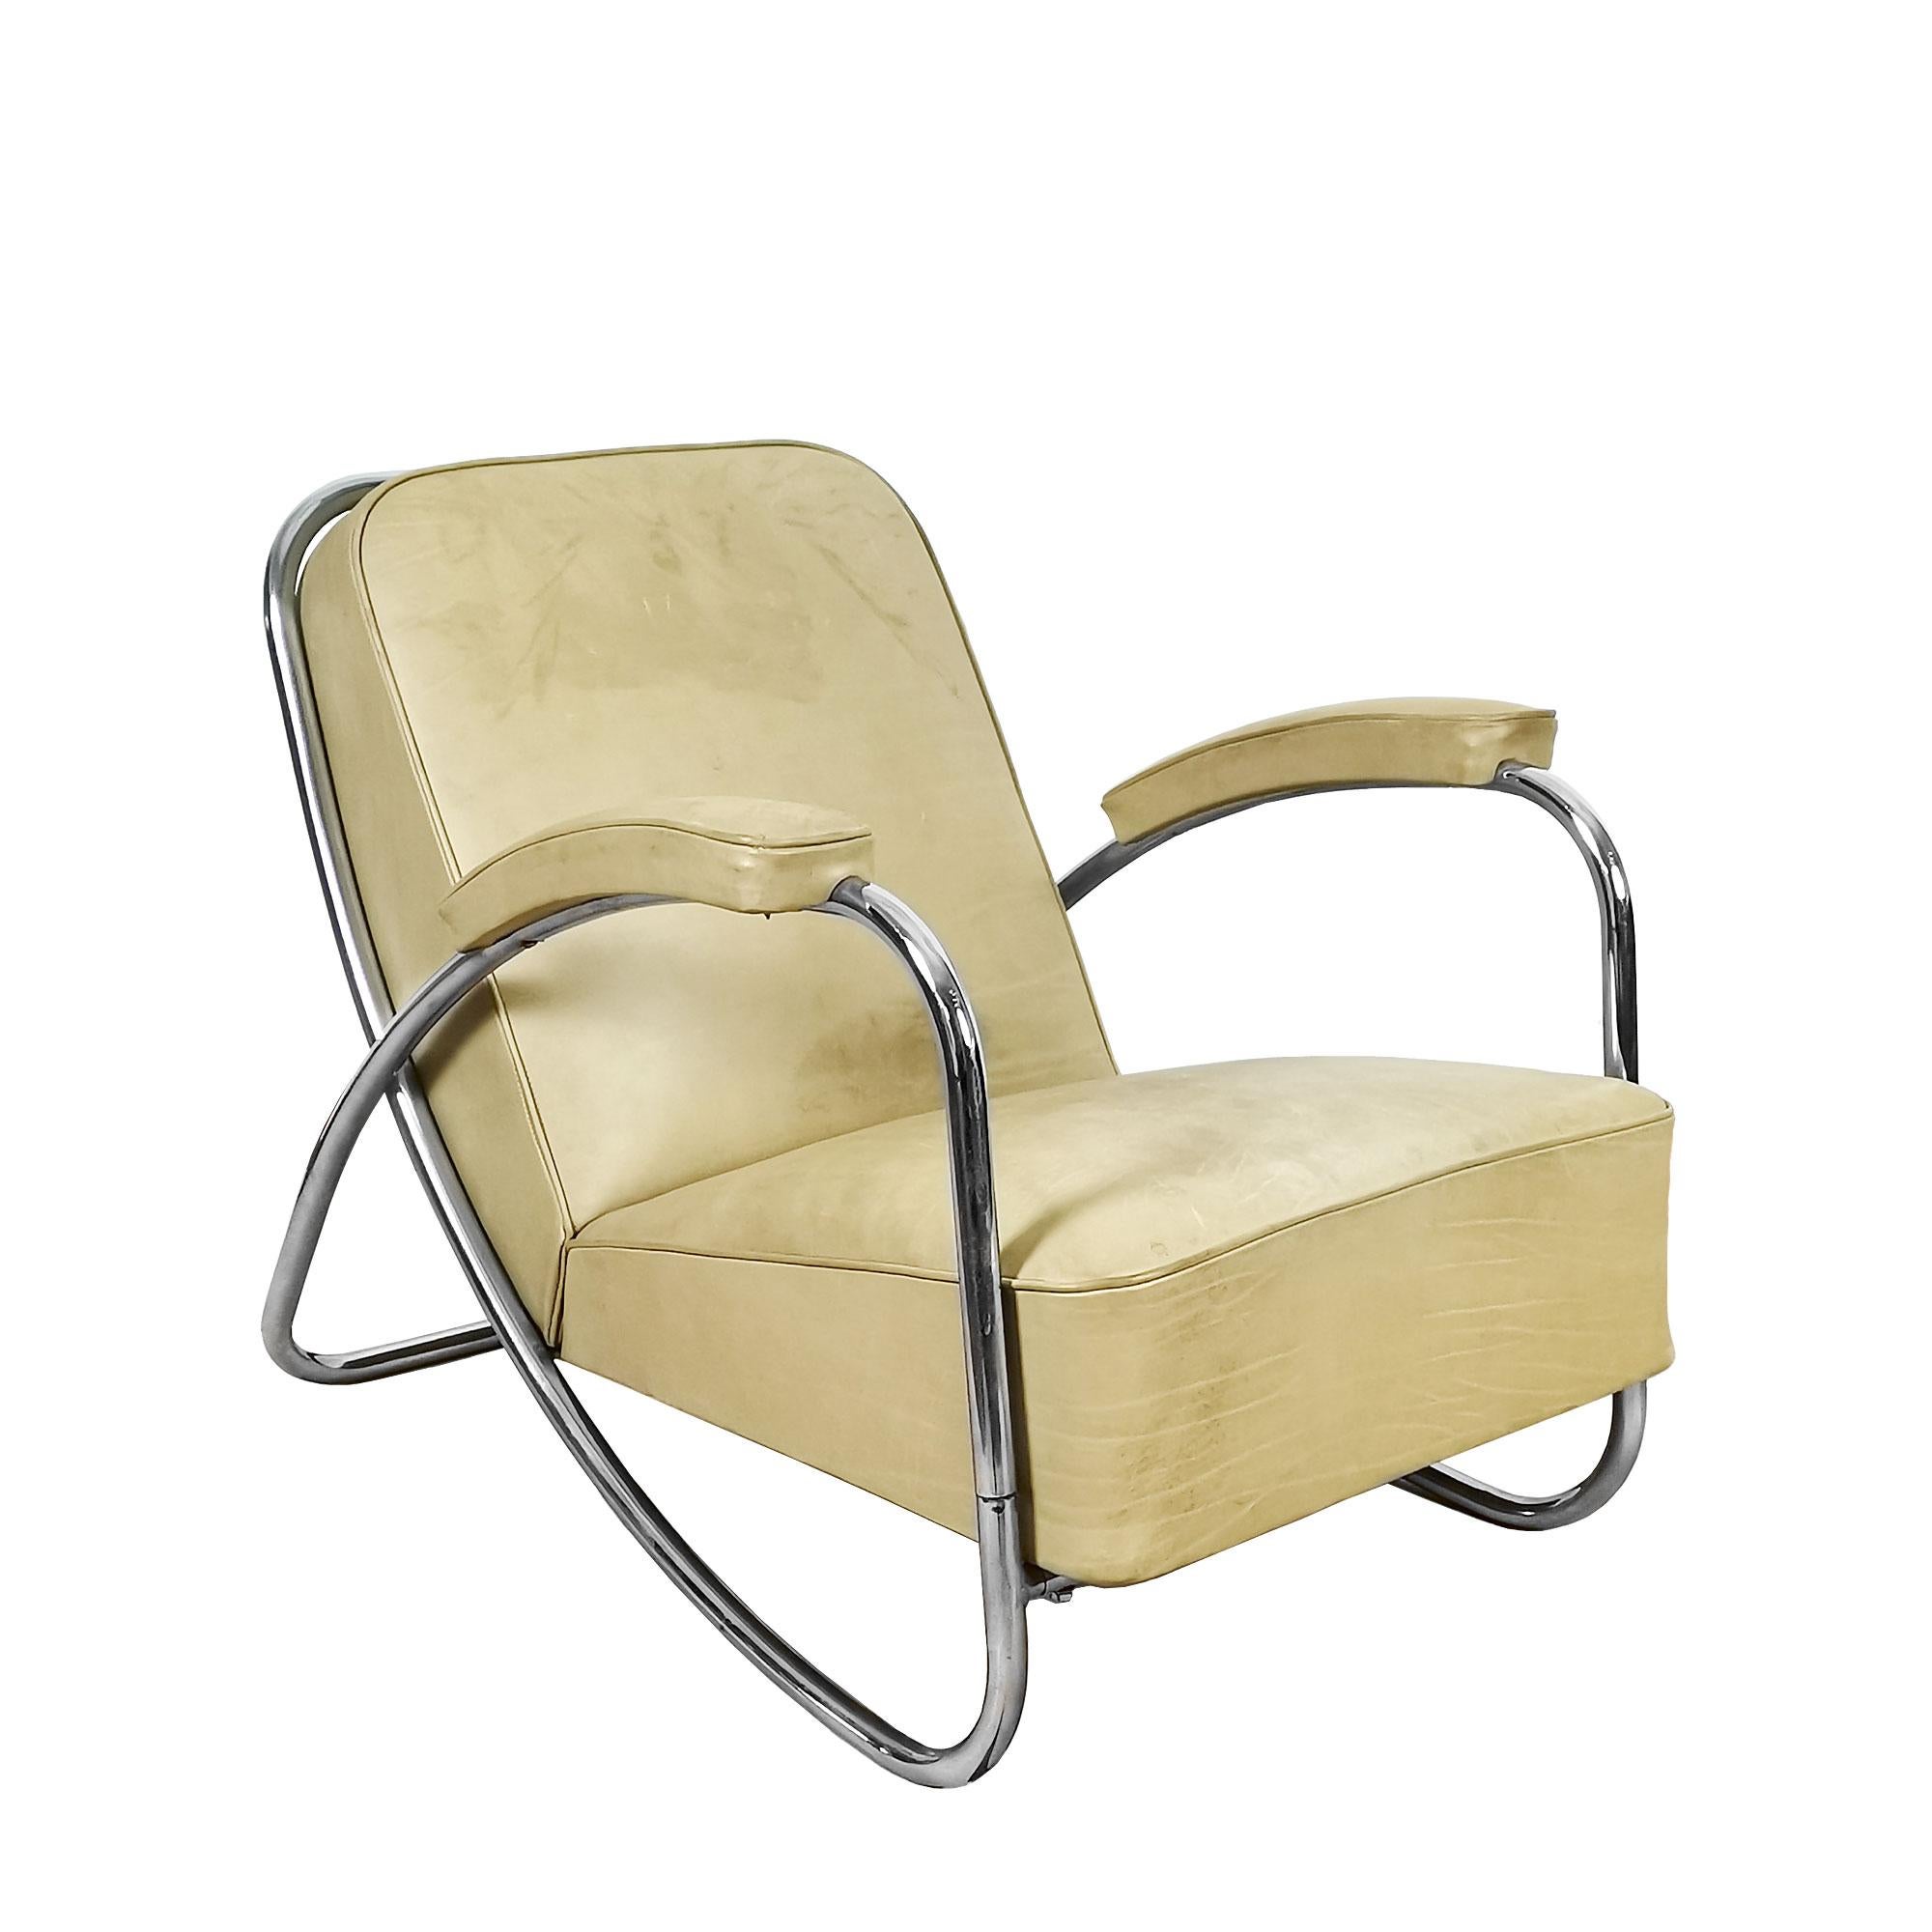 1920s armchair styles